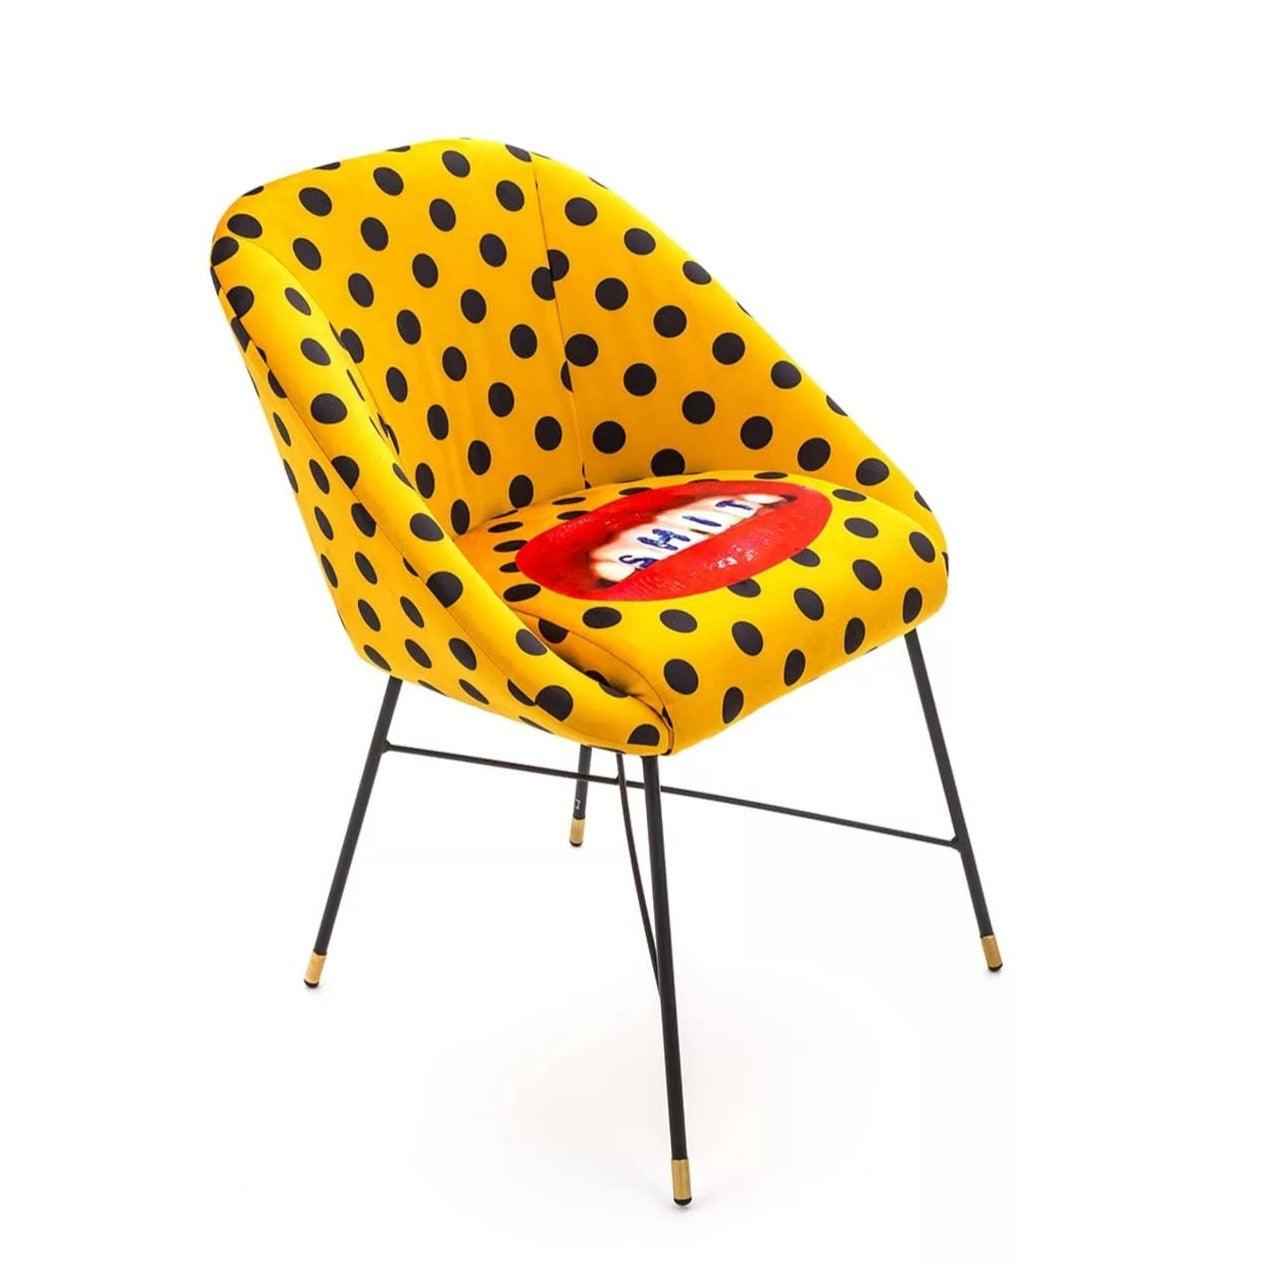 SHIT chair yellow - Eye on Design